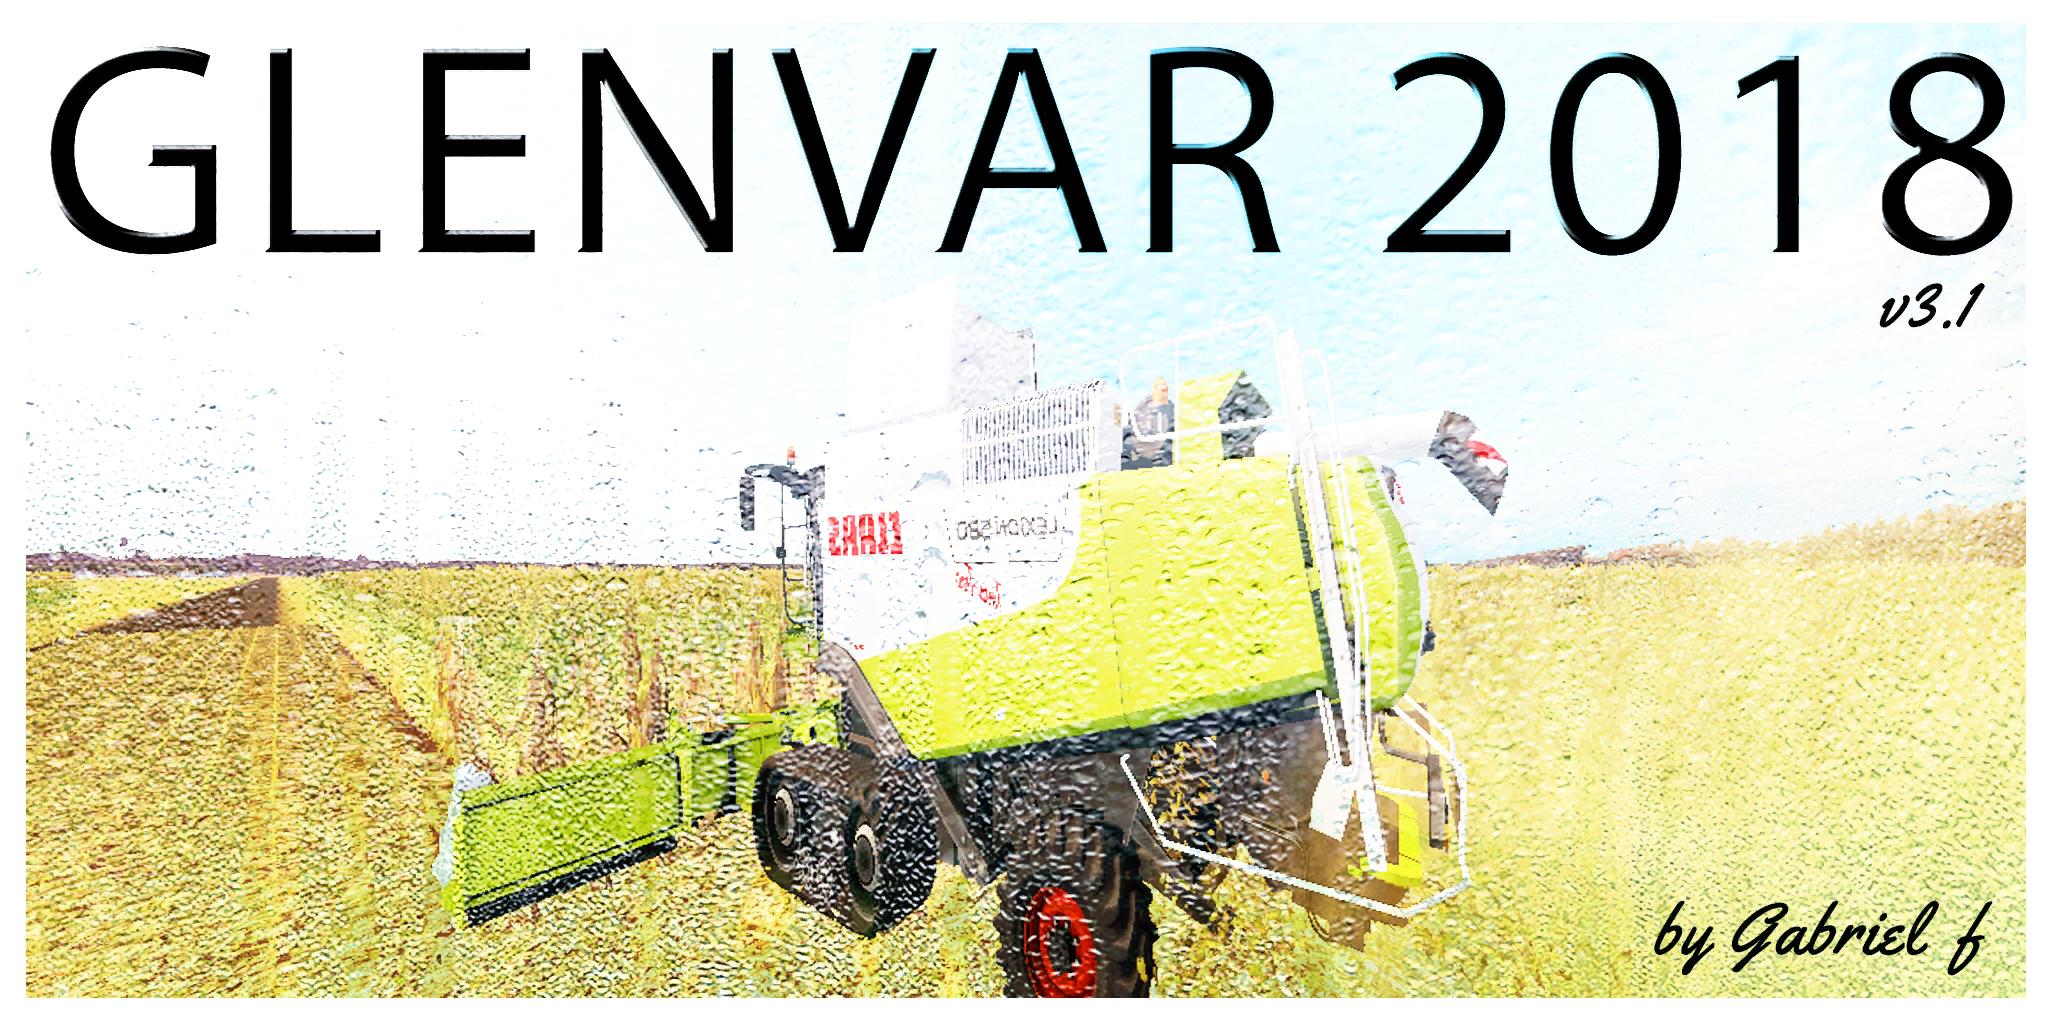 FS17 - Glenvar 2018 Map V3.1 Edition